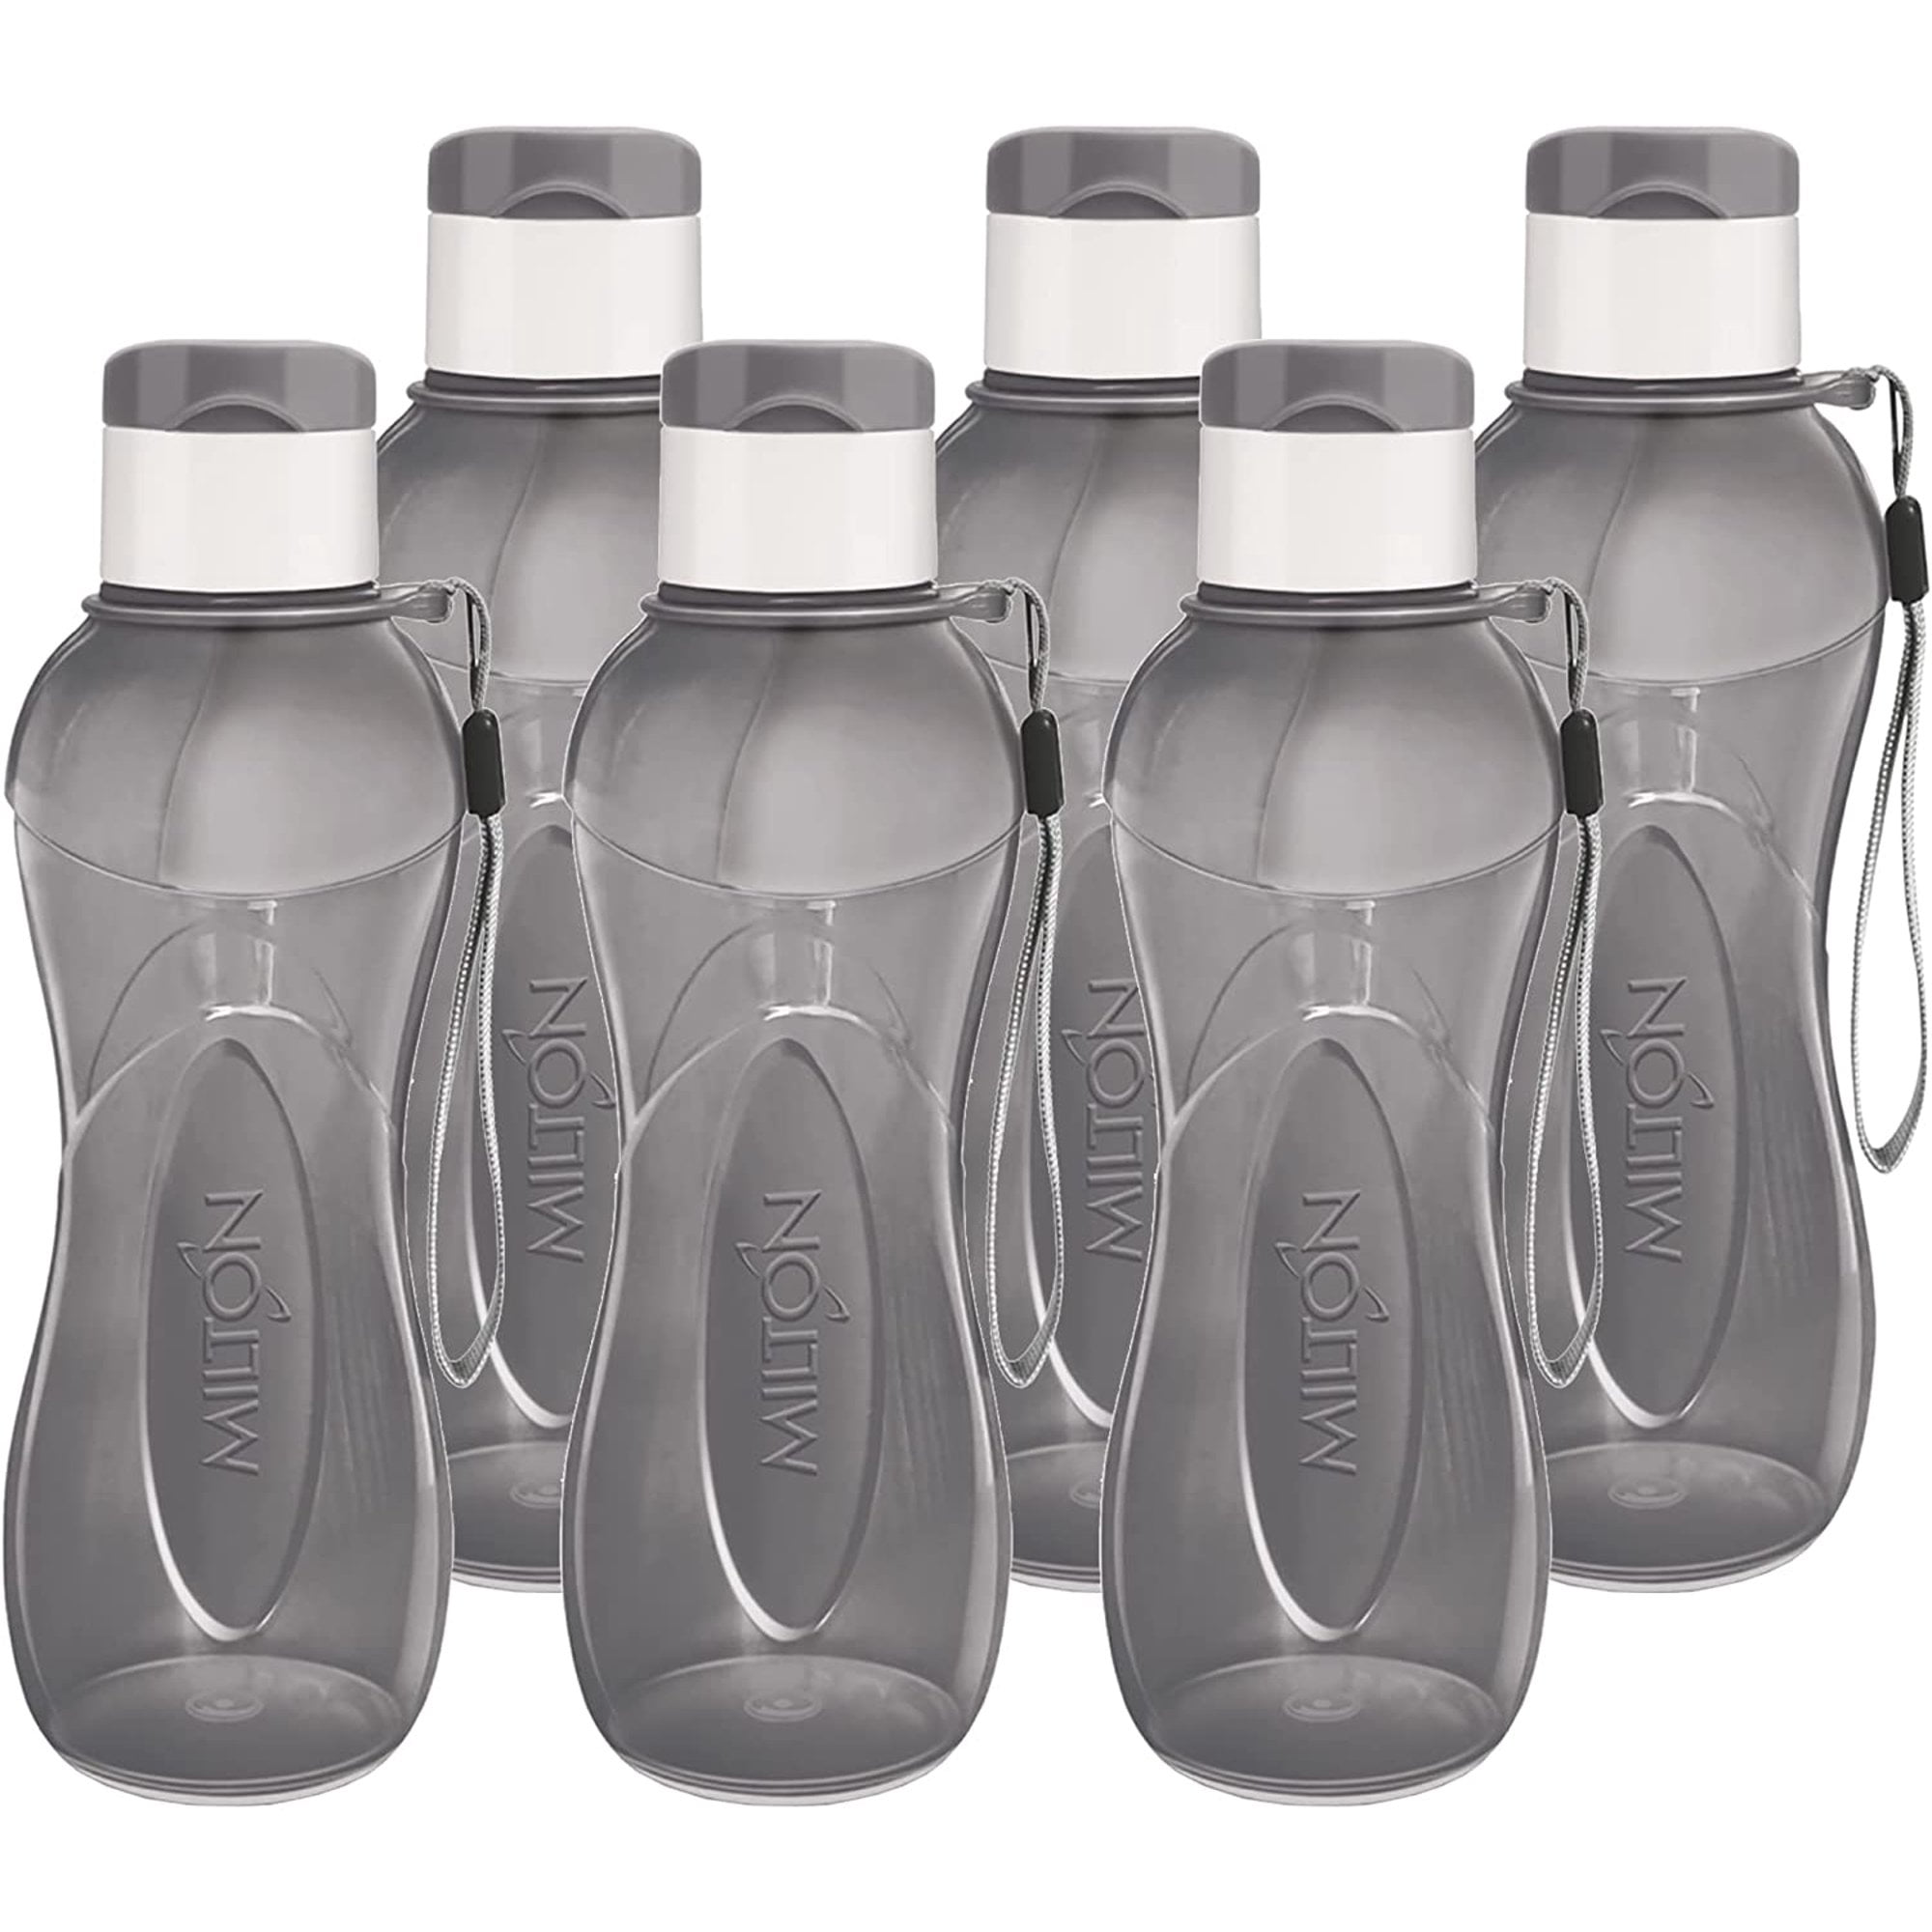 MILTON 6-Pc Reusable Water Bottles Bulk Pack 12 Oz Plastic Bottles with  Caps, Pink 